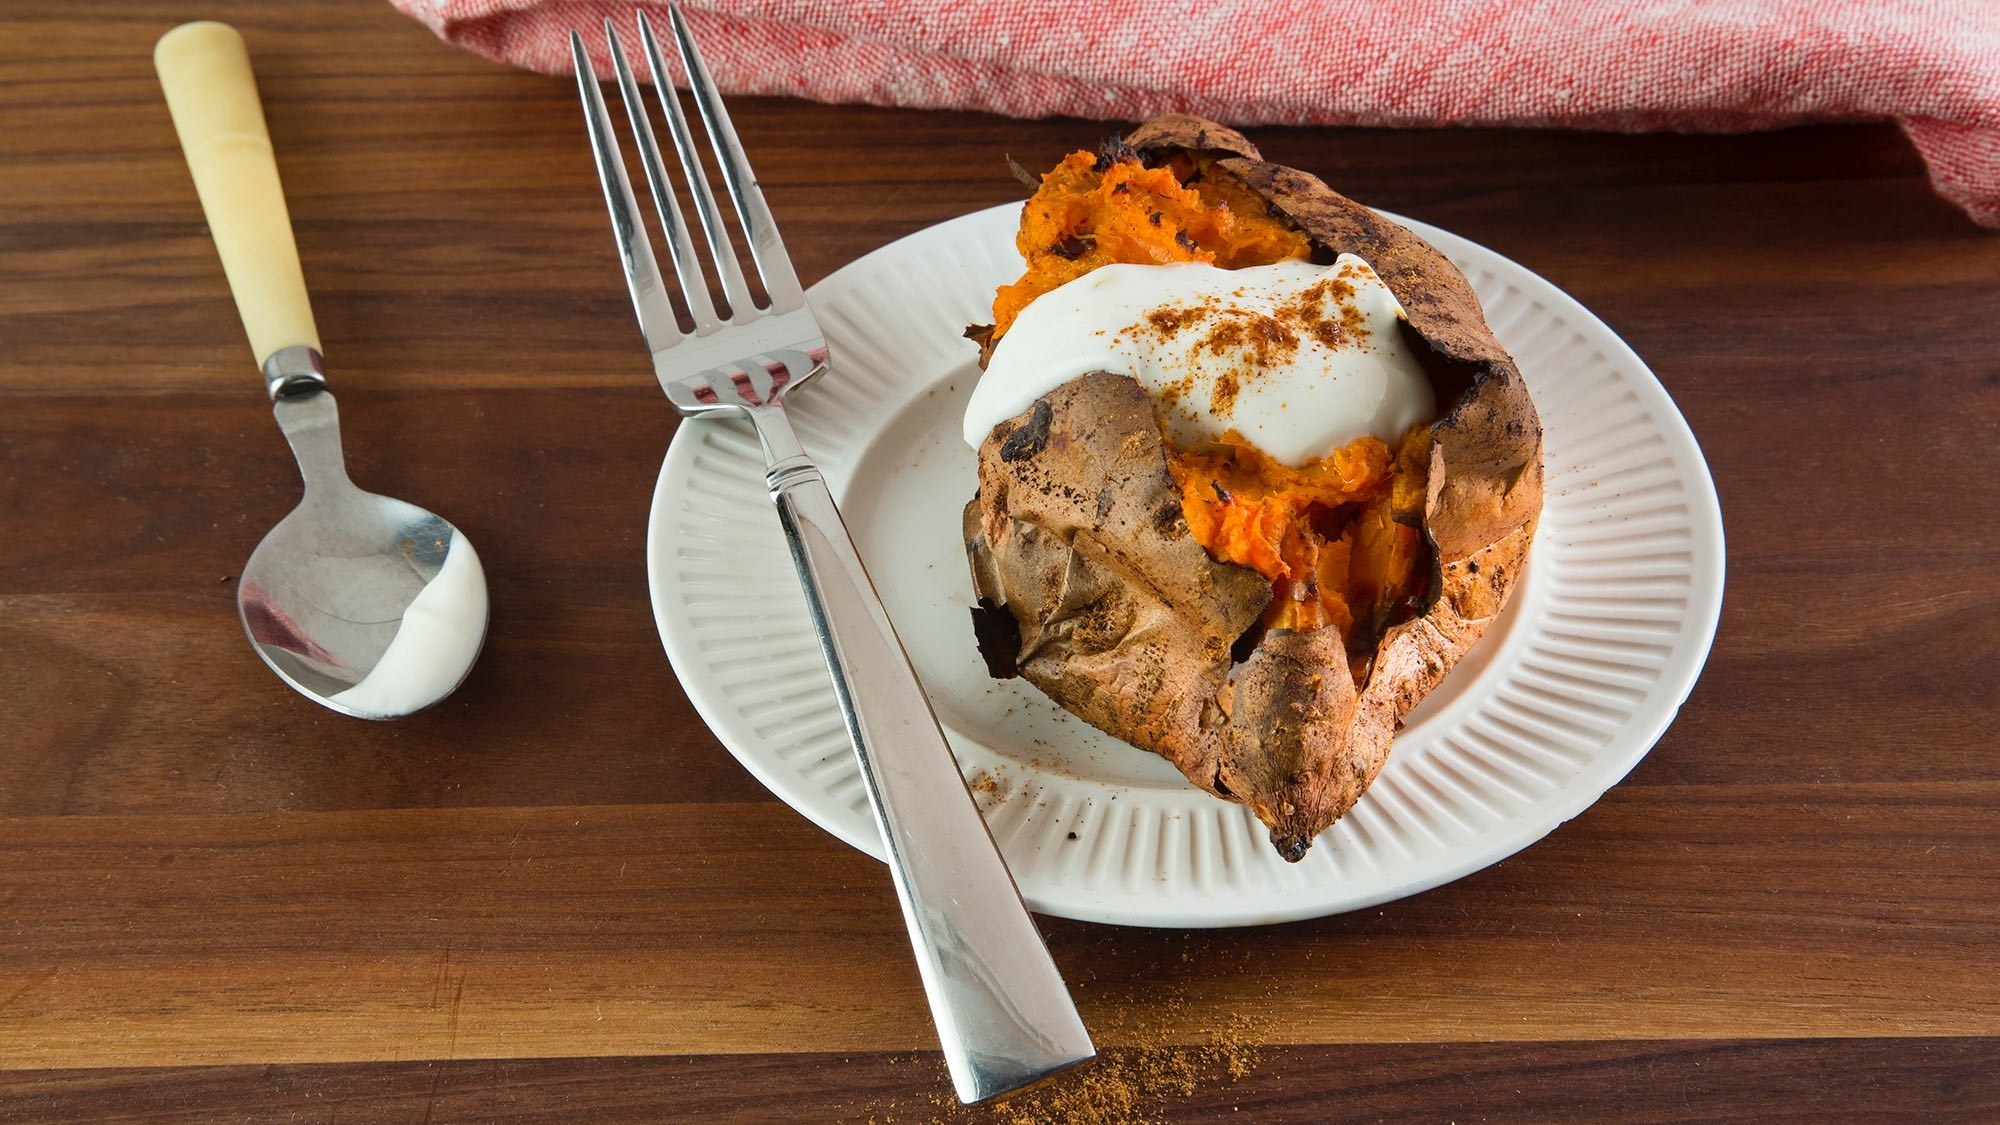 A baked sweet potato on a plate